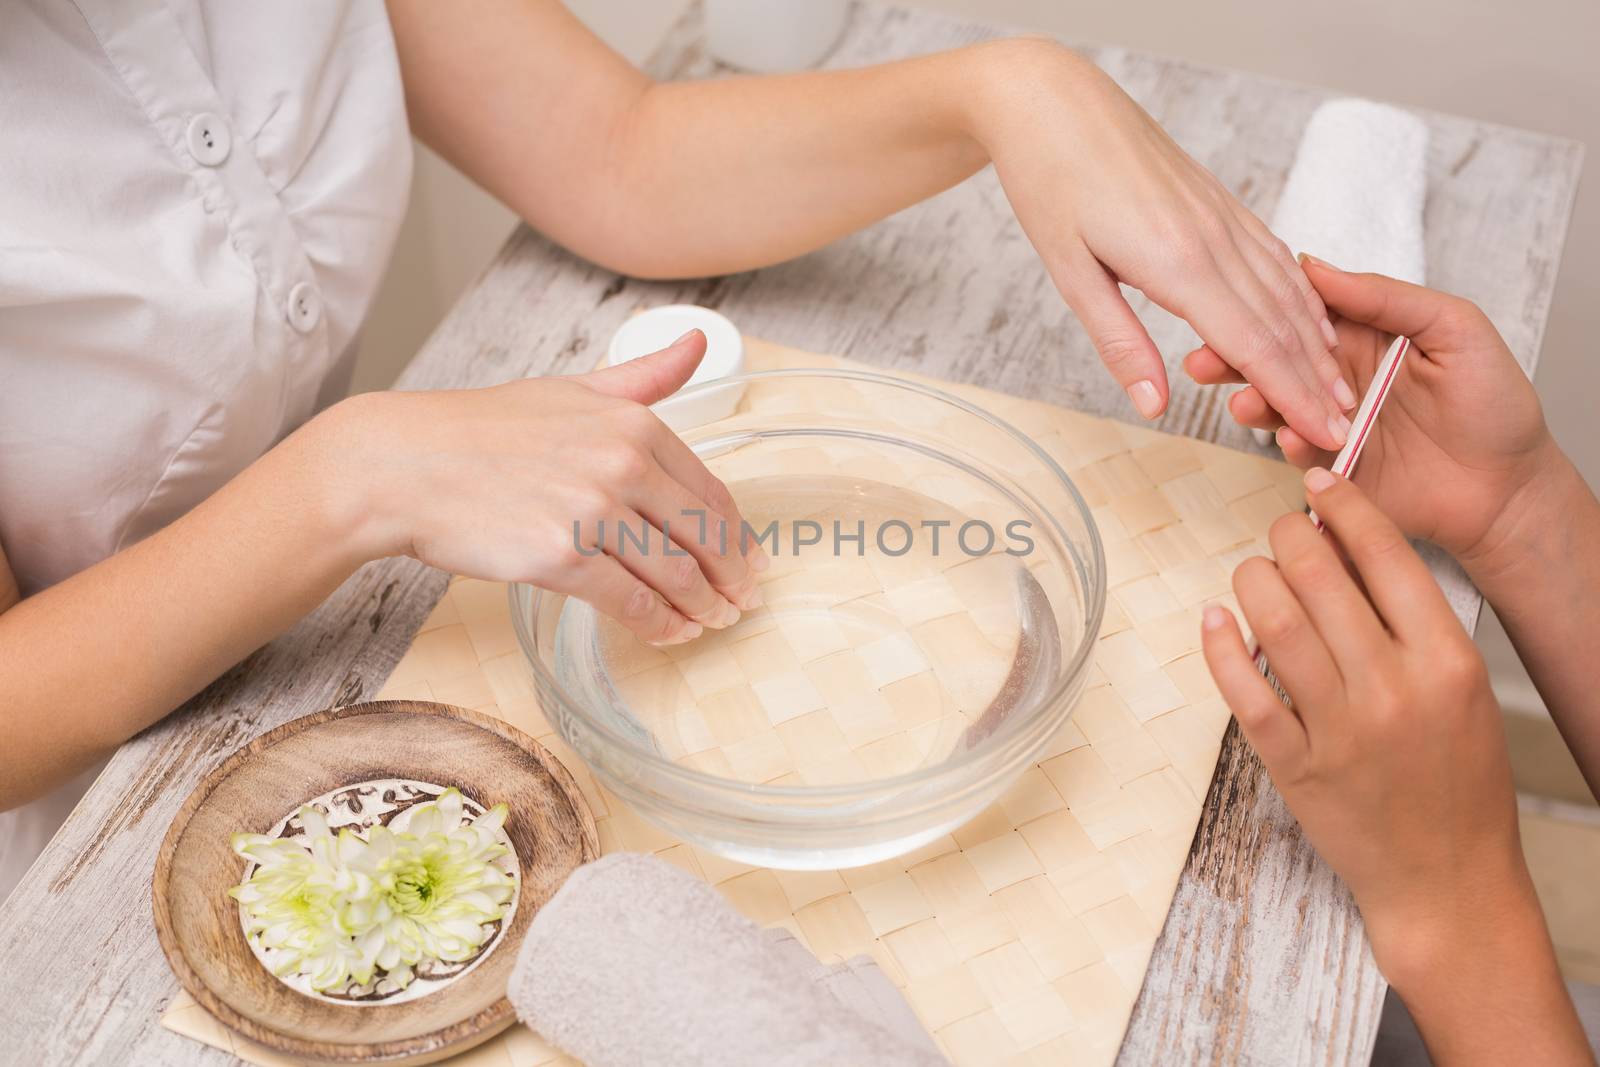 Nail technician giving customer a manicure by Wavebreakmedia